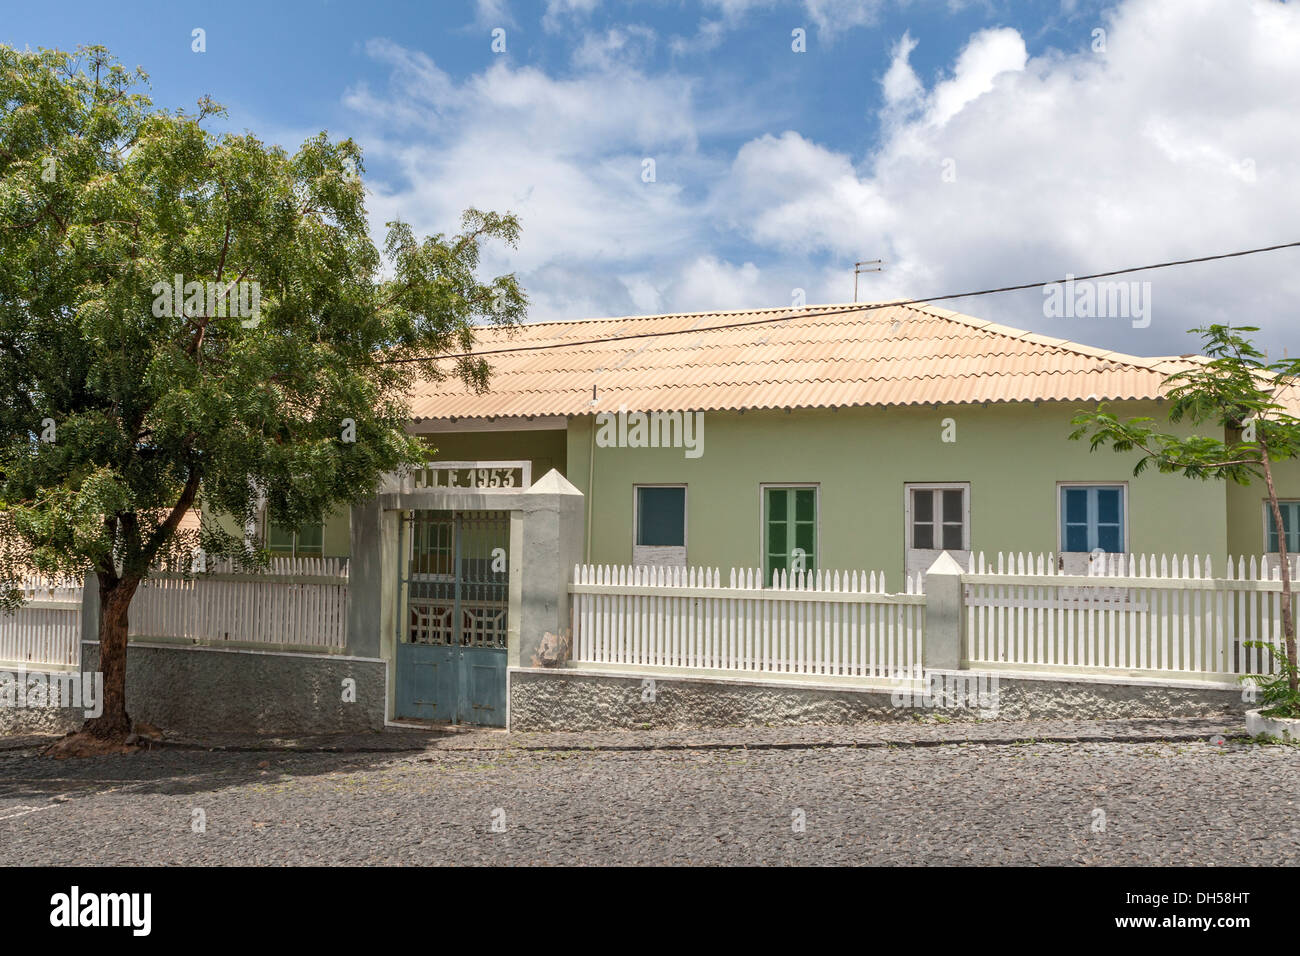 Local hospital, Historic center, Sao Filipe, Sobrado architecture, Island of Fogo, Cape Verde Photo - Alamy